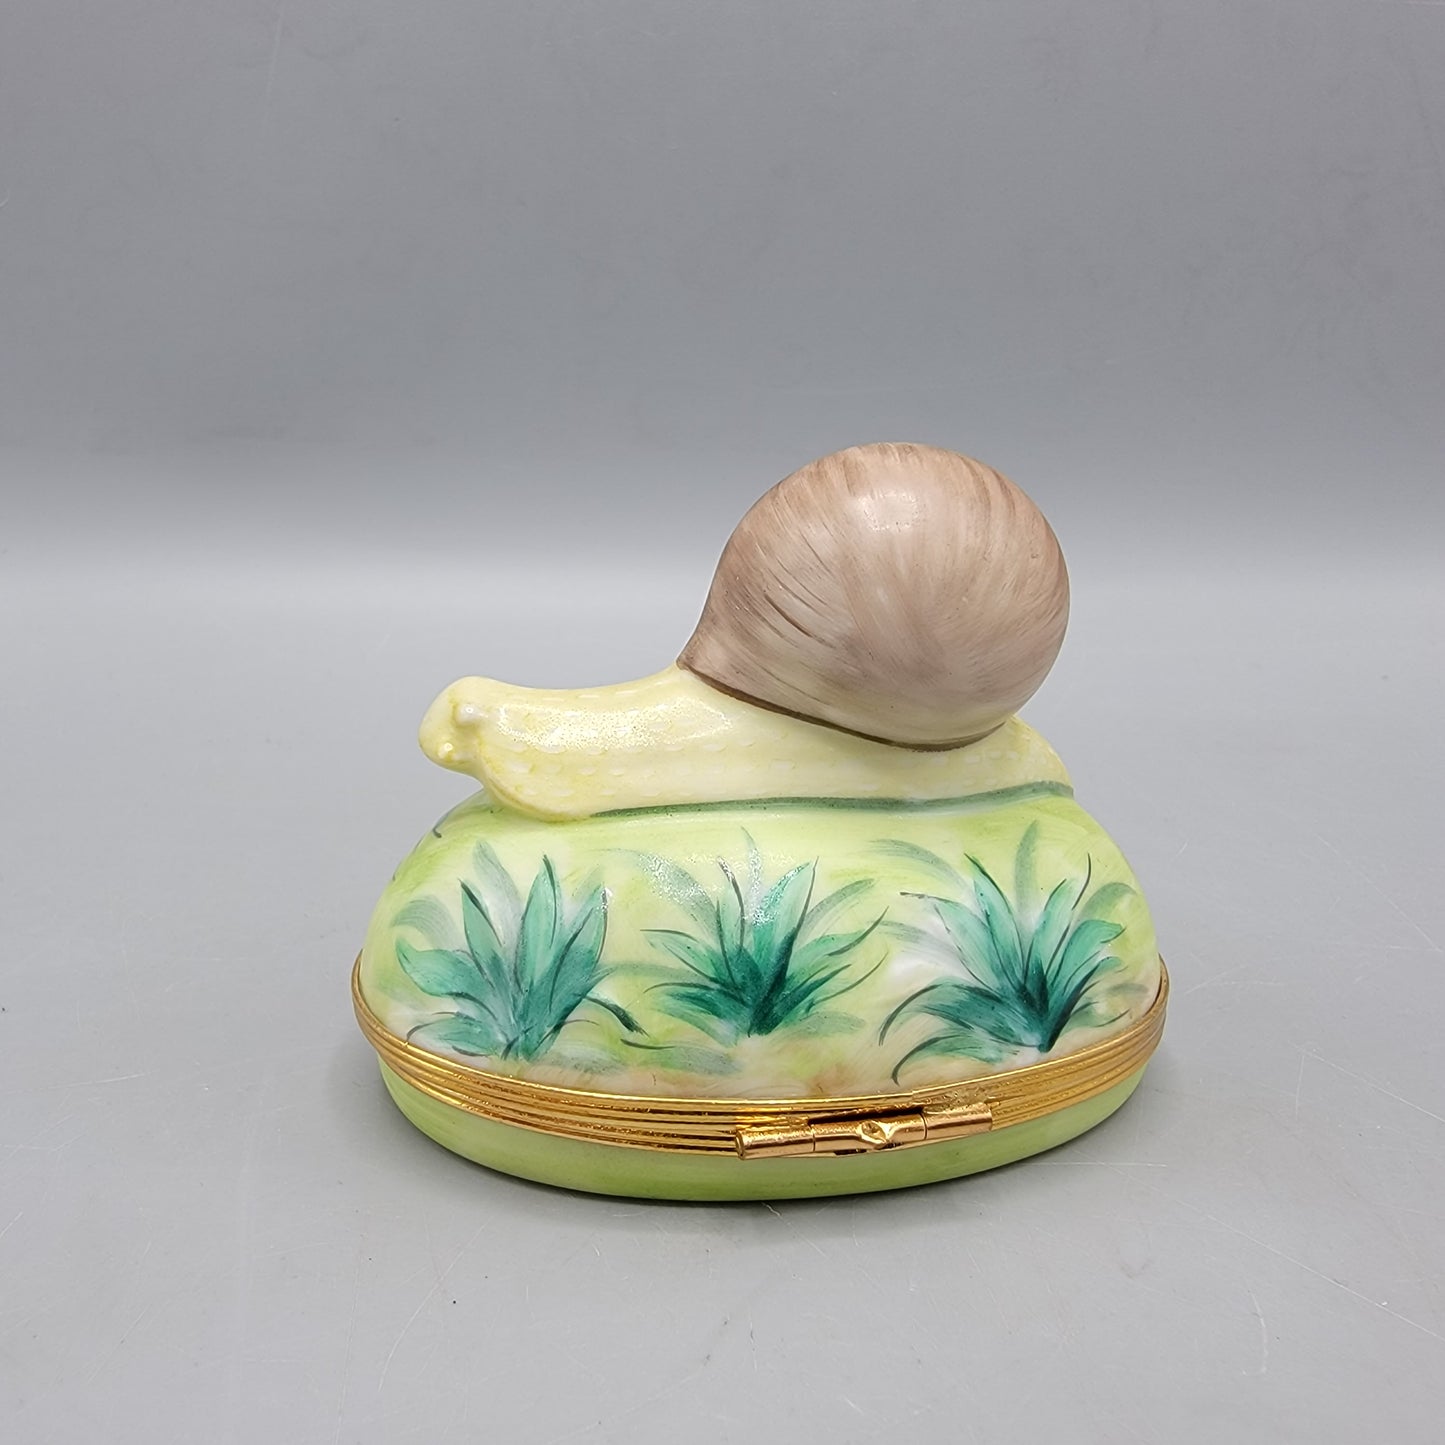 Chamart Limoges Porcelain Snail Box